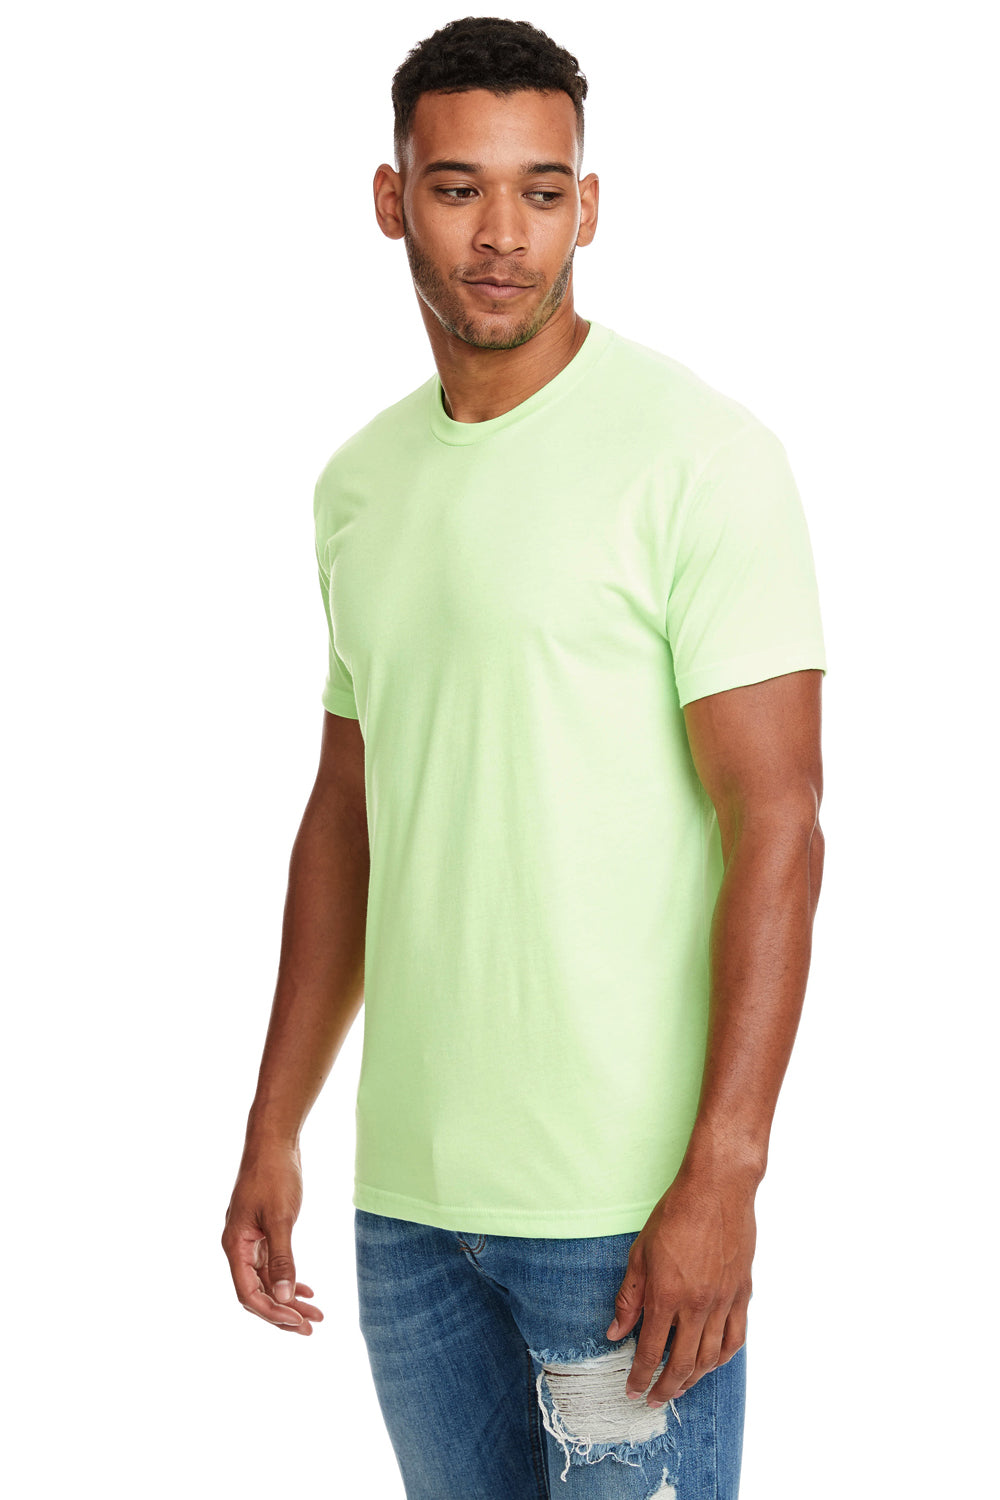 Next Level N6210 Mens CVC Jersey Short Sleeve Crewneck T-Shirt Apple Green Side